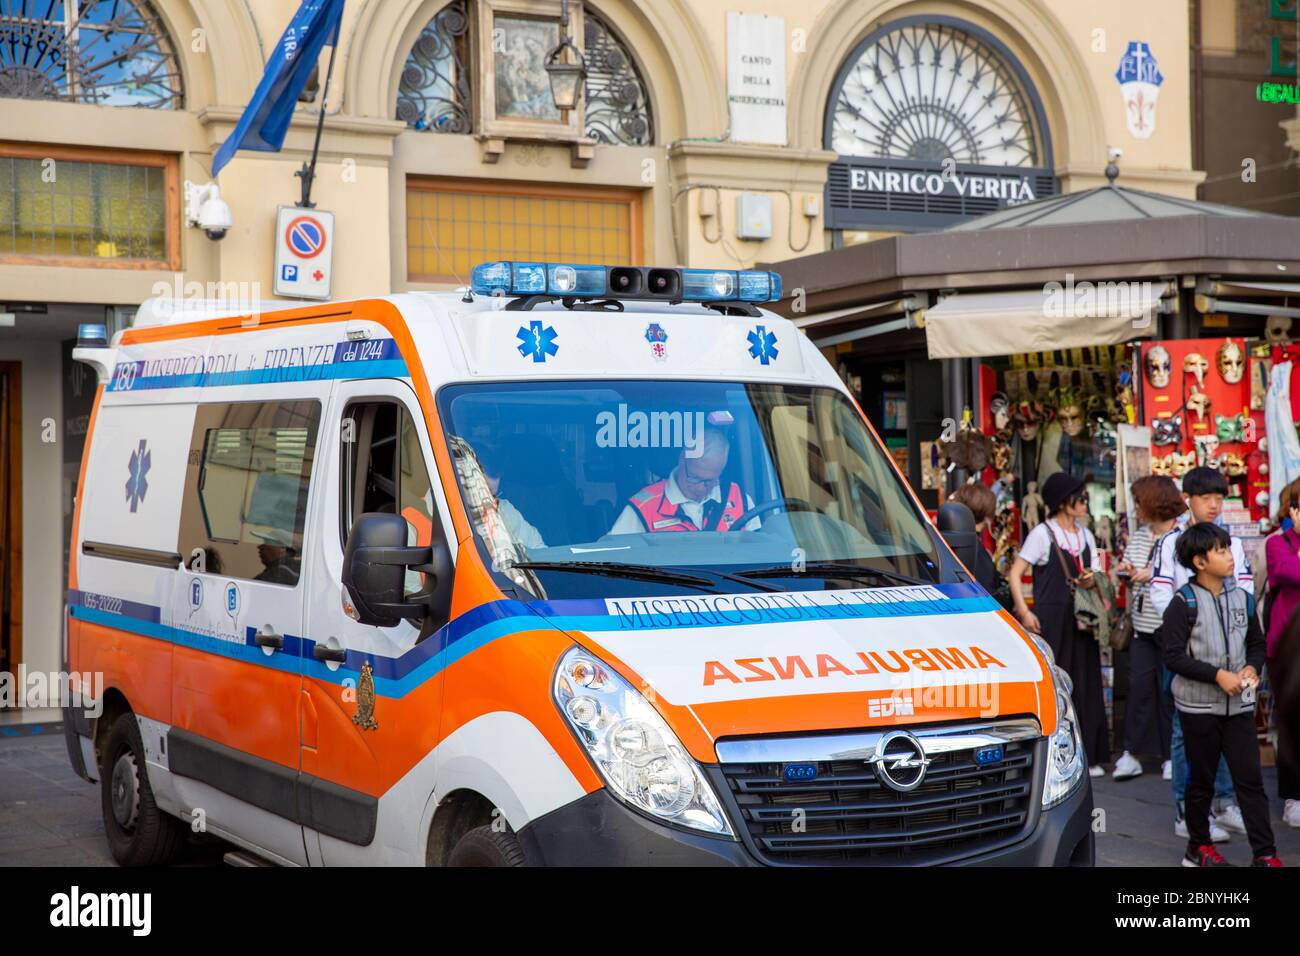 Italian ambulance vehicle in Florence city centre,Tuscany,Italy Stock Photo